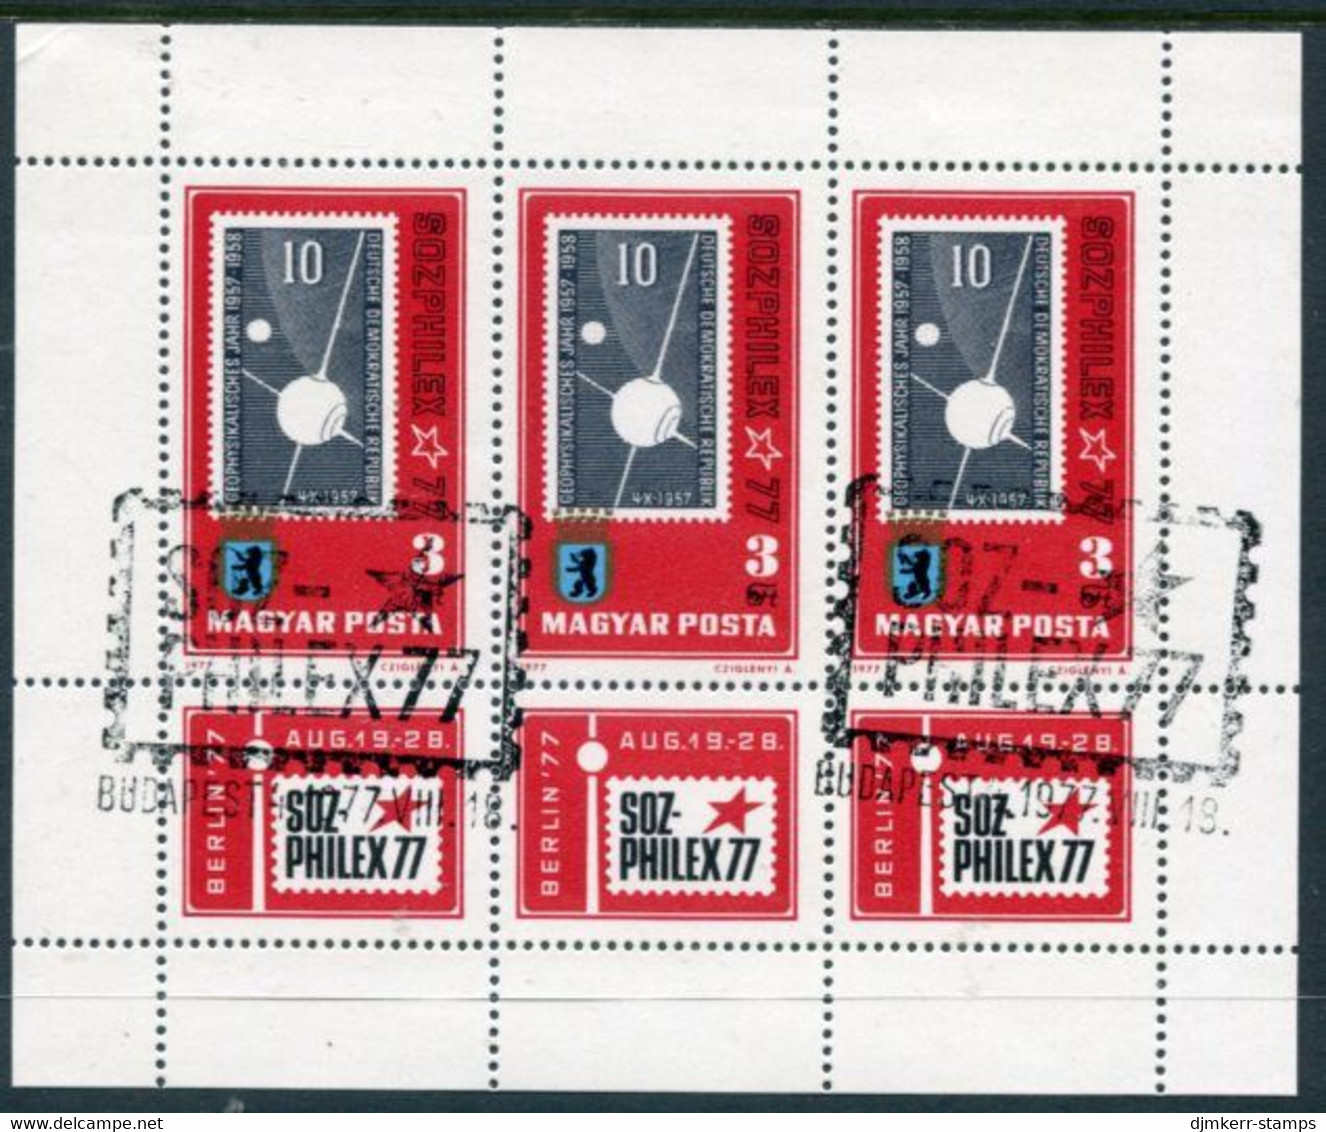 HUNGARY 1977 SOZPHILEX Stamp Exhibition Sheetlet Used.  Michel 3208 Kb - Blocks & Kleinbögen